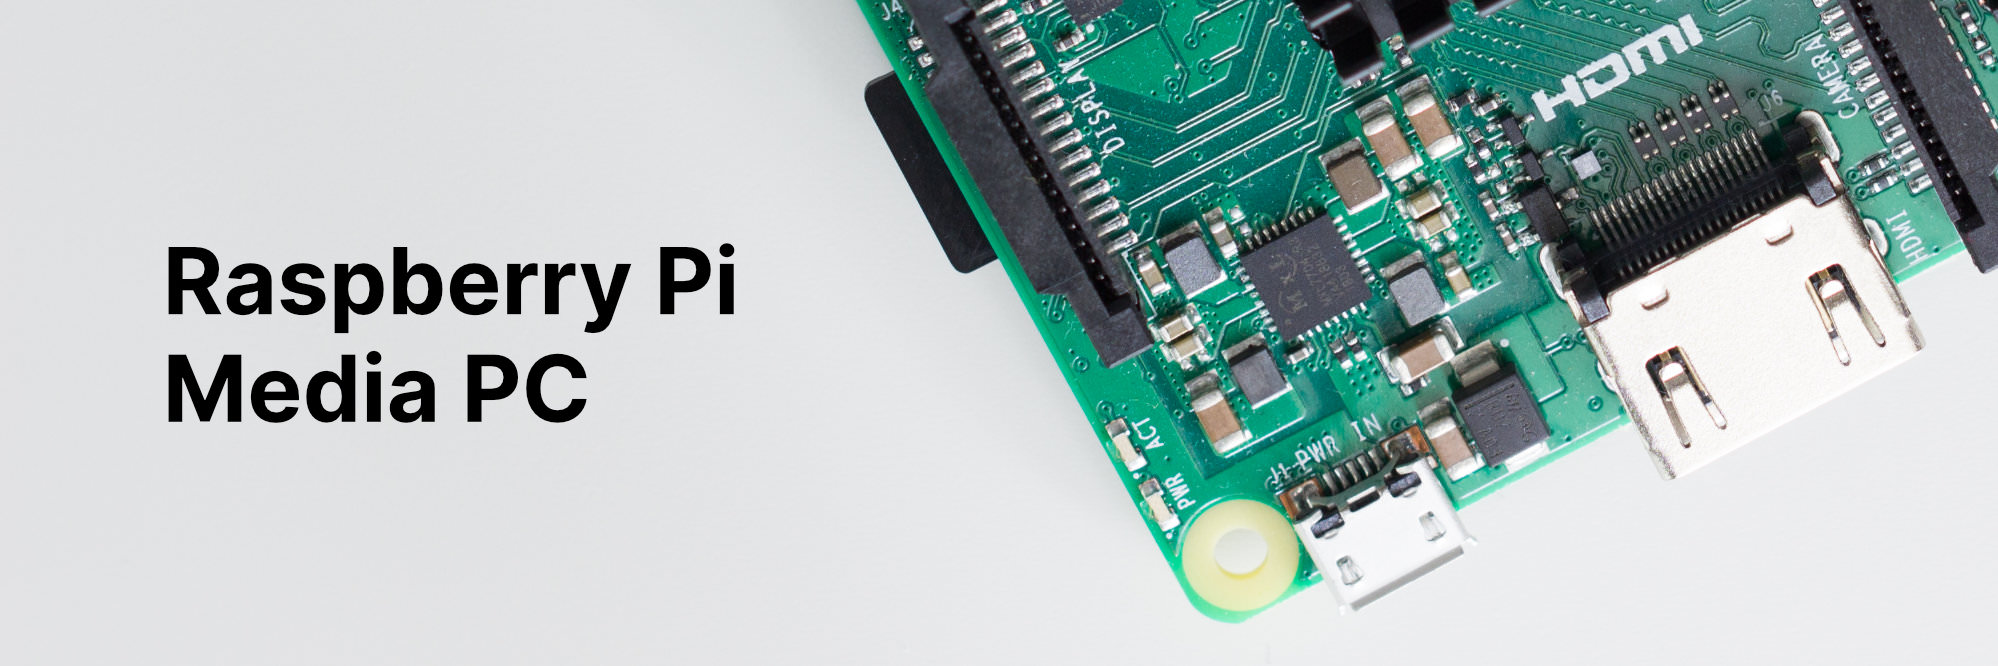 Raspberry Pi 3B ja 3B+ Media PC:nä